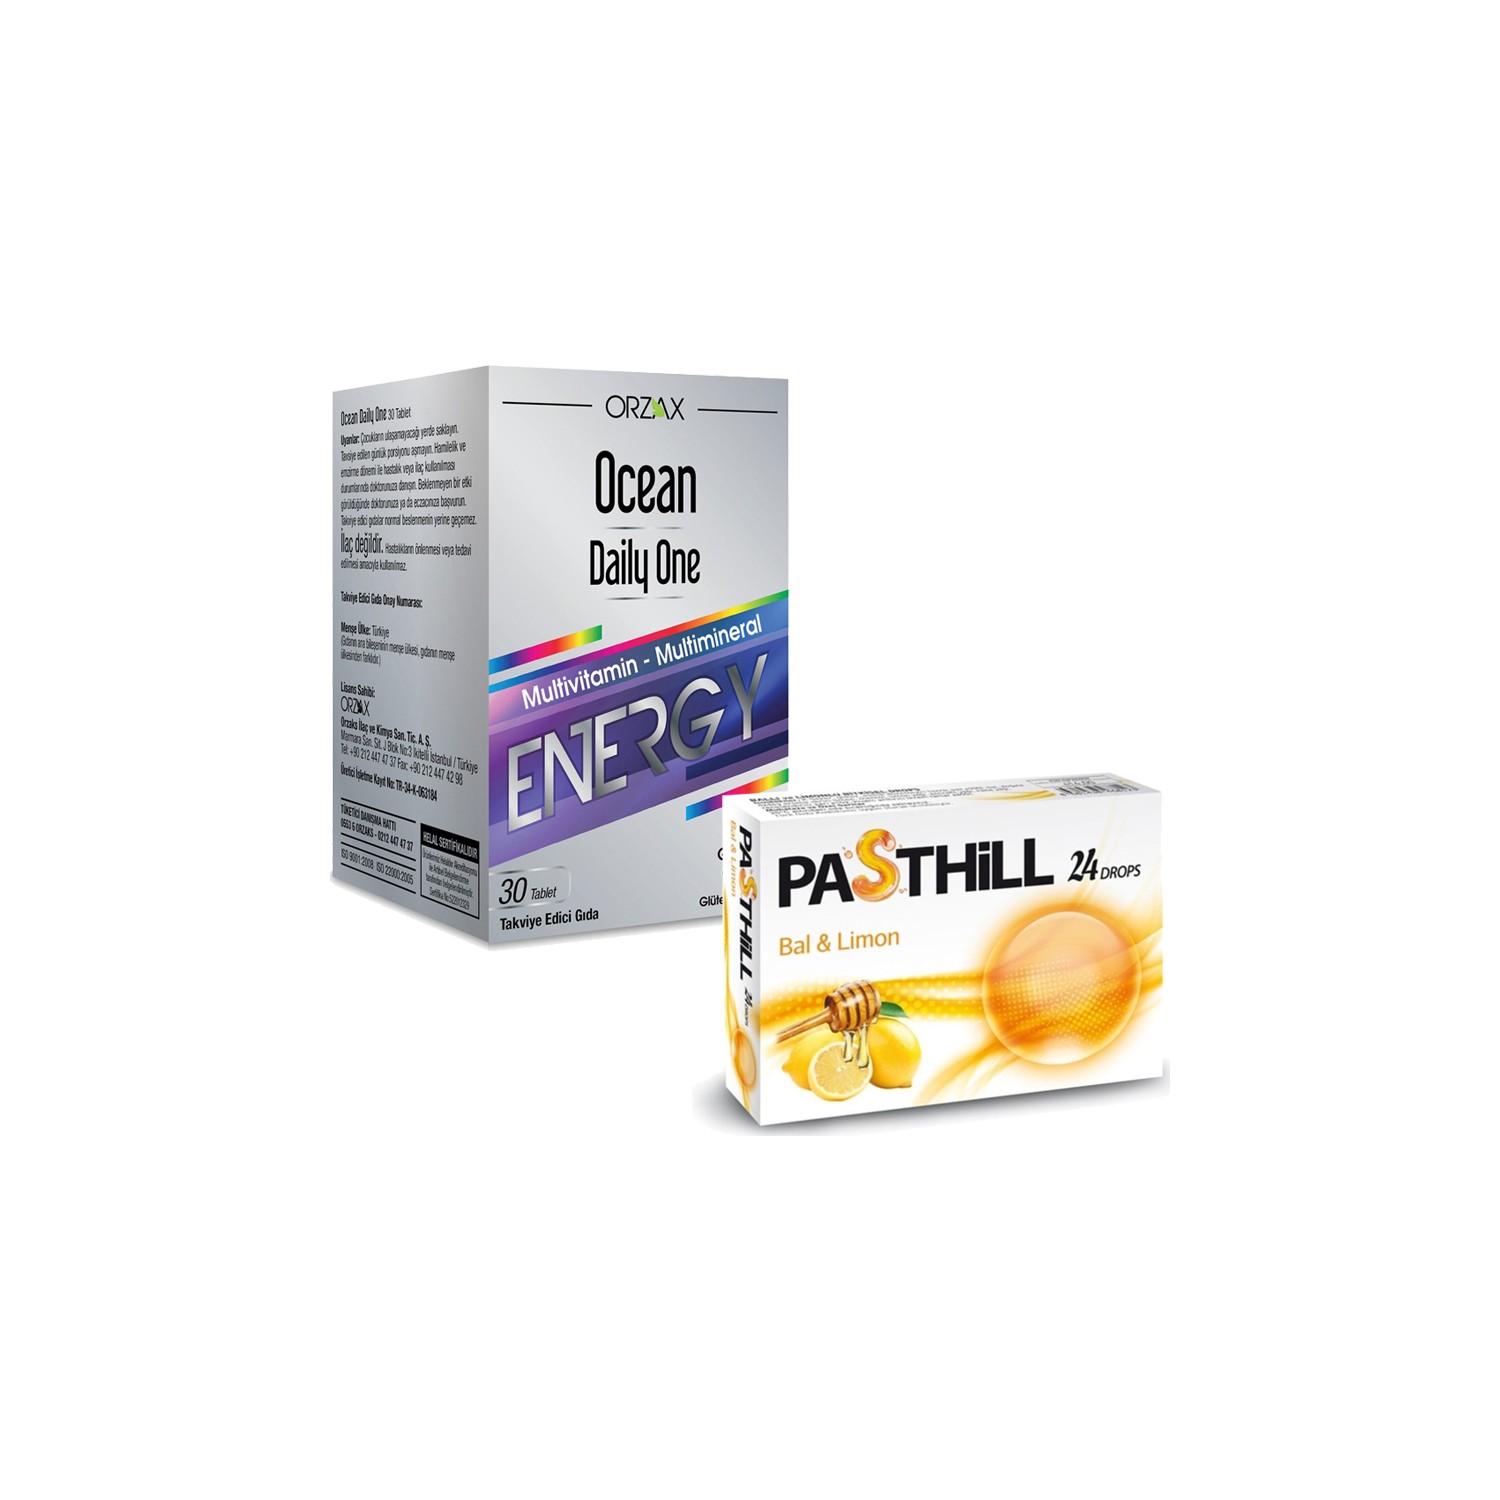 Пищевая добавка Orzax Ocean Daily One Energy, 30 таблеток + Пастилки Pasthill Orange & Vitamin C